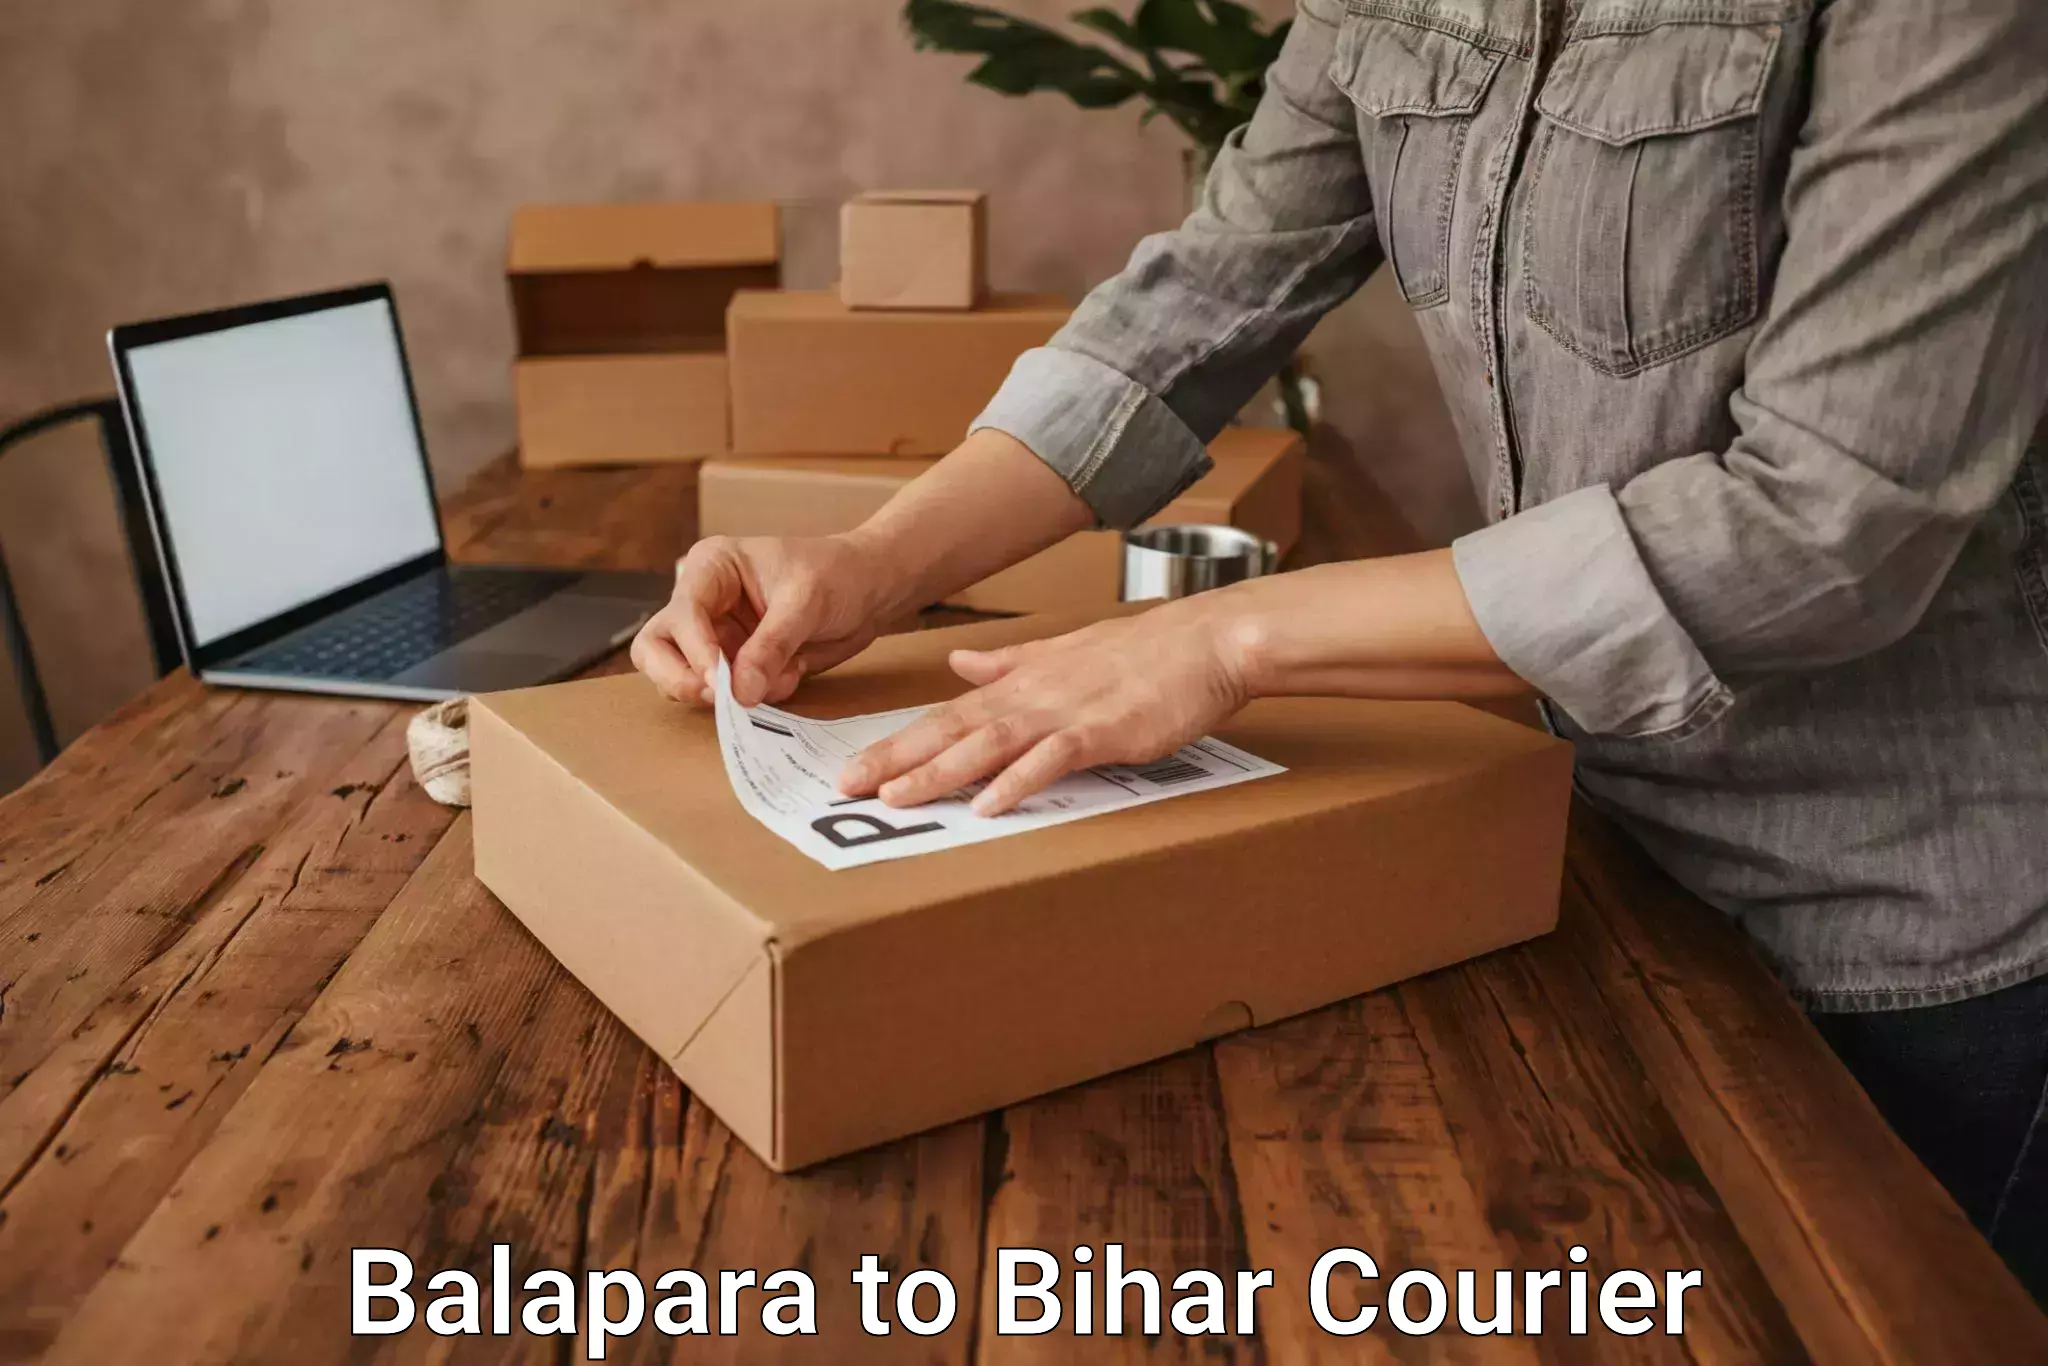 Courier services in Balapara to Manjhaul